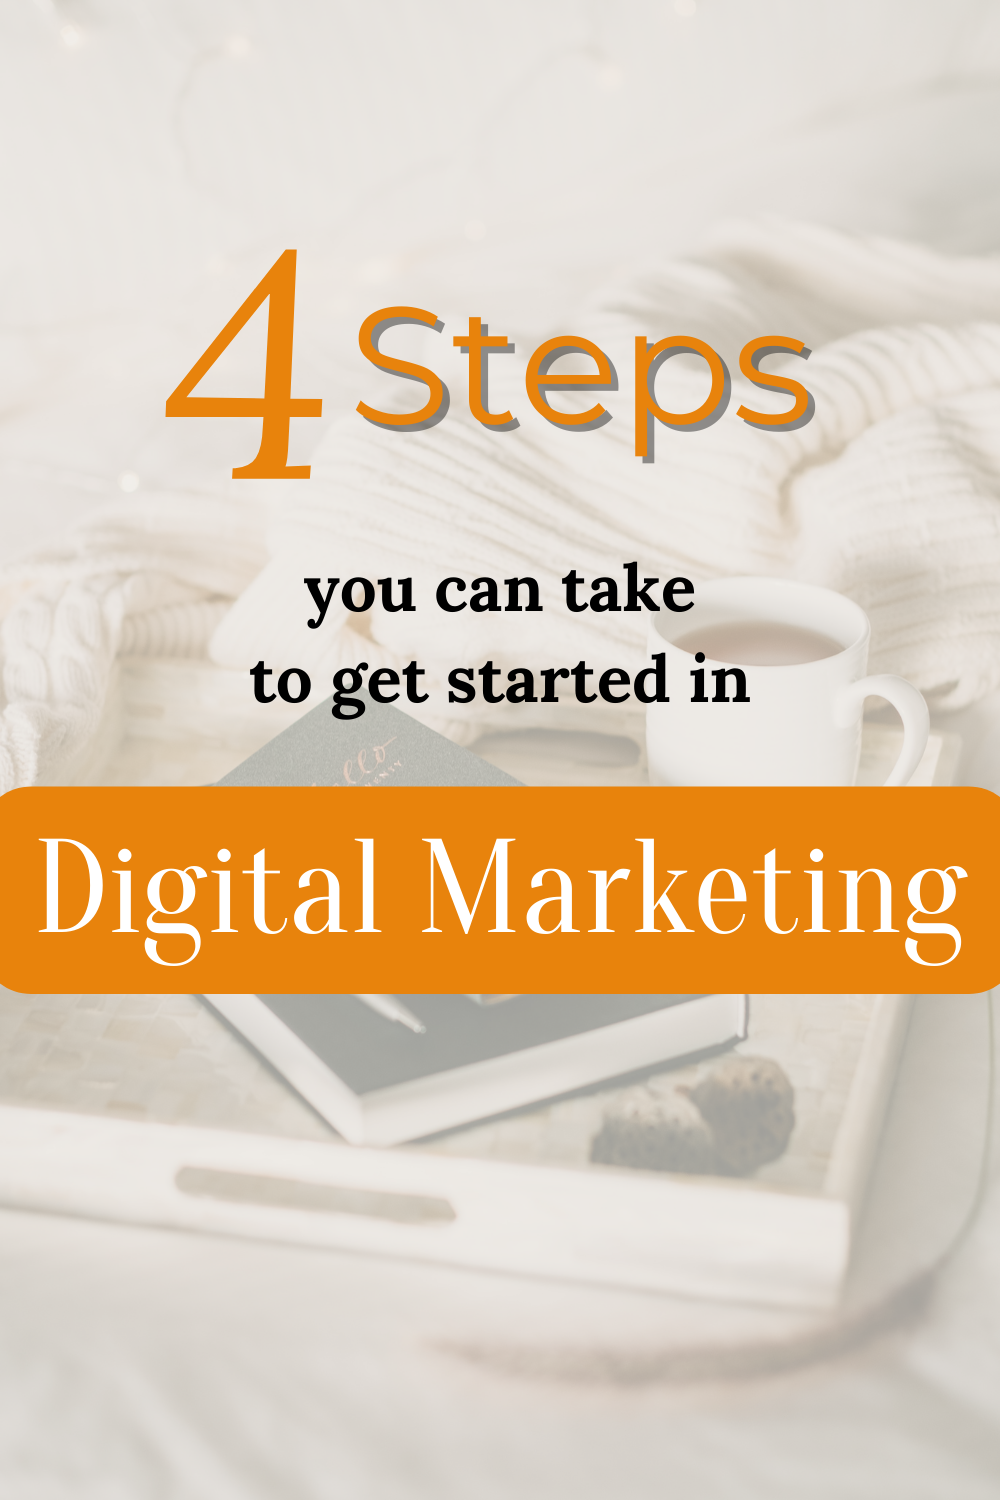 4 steps: Get started with Digital Marketing!